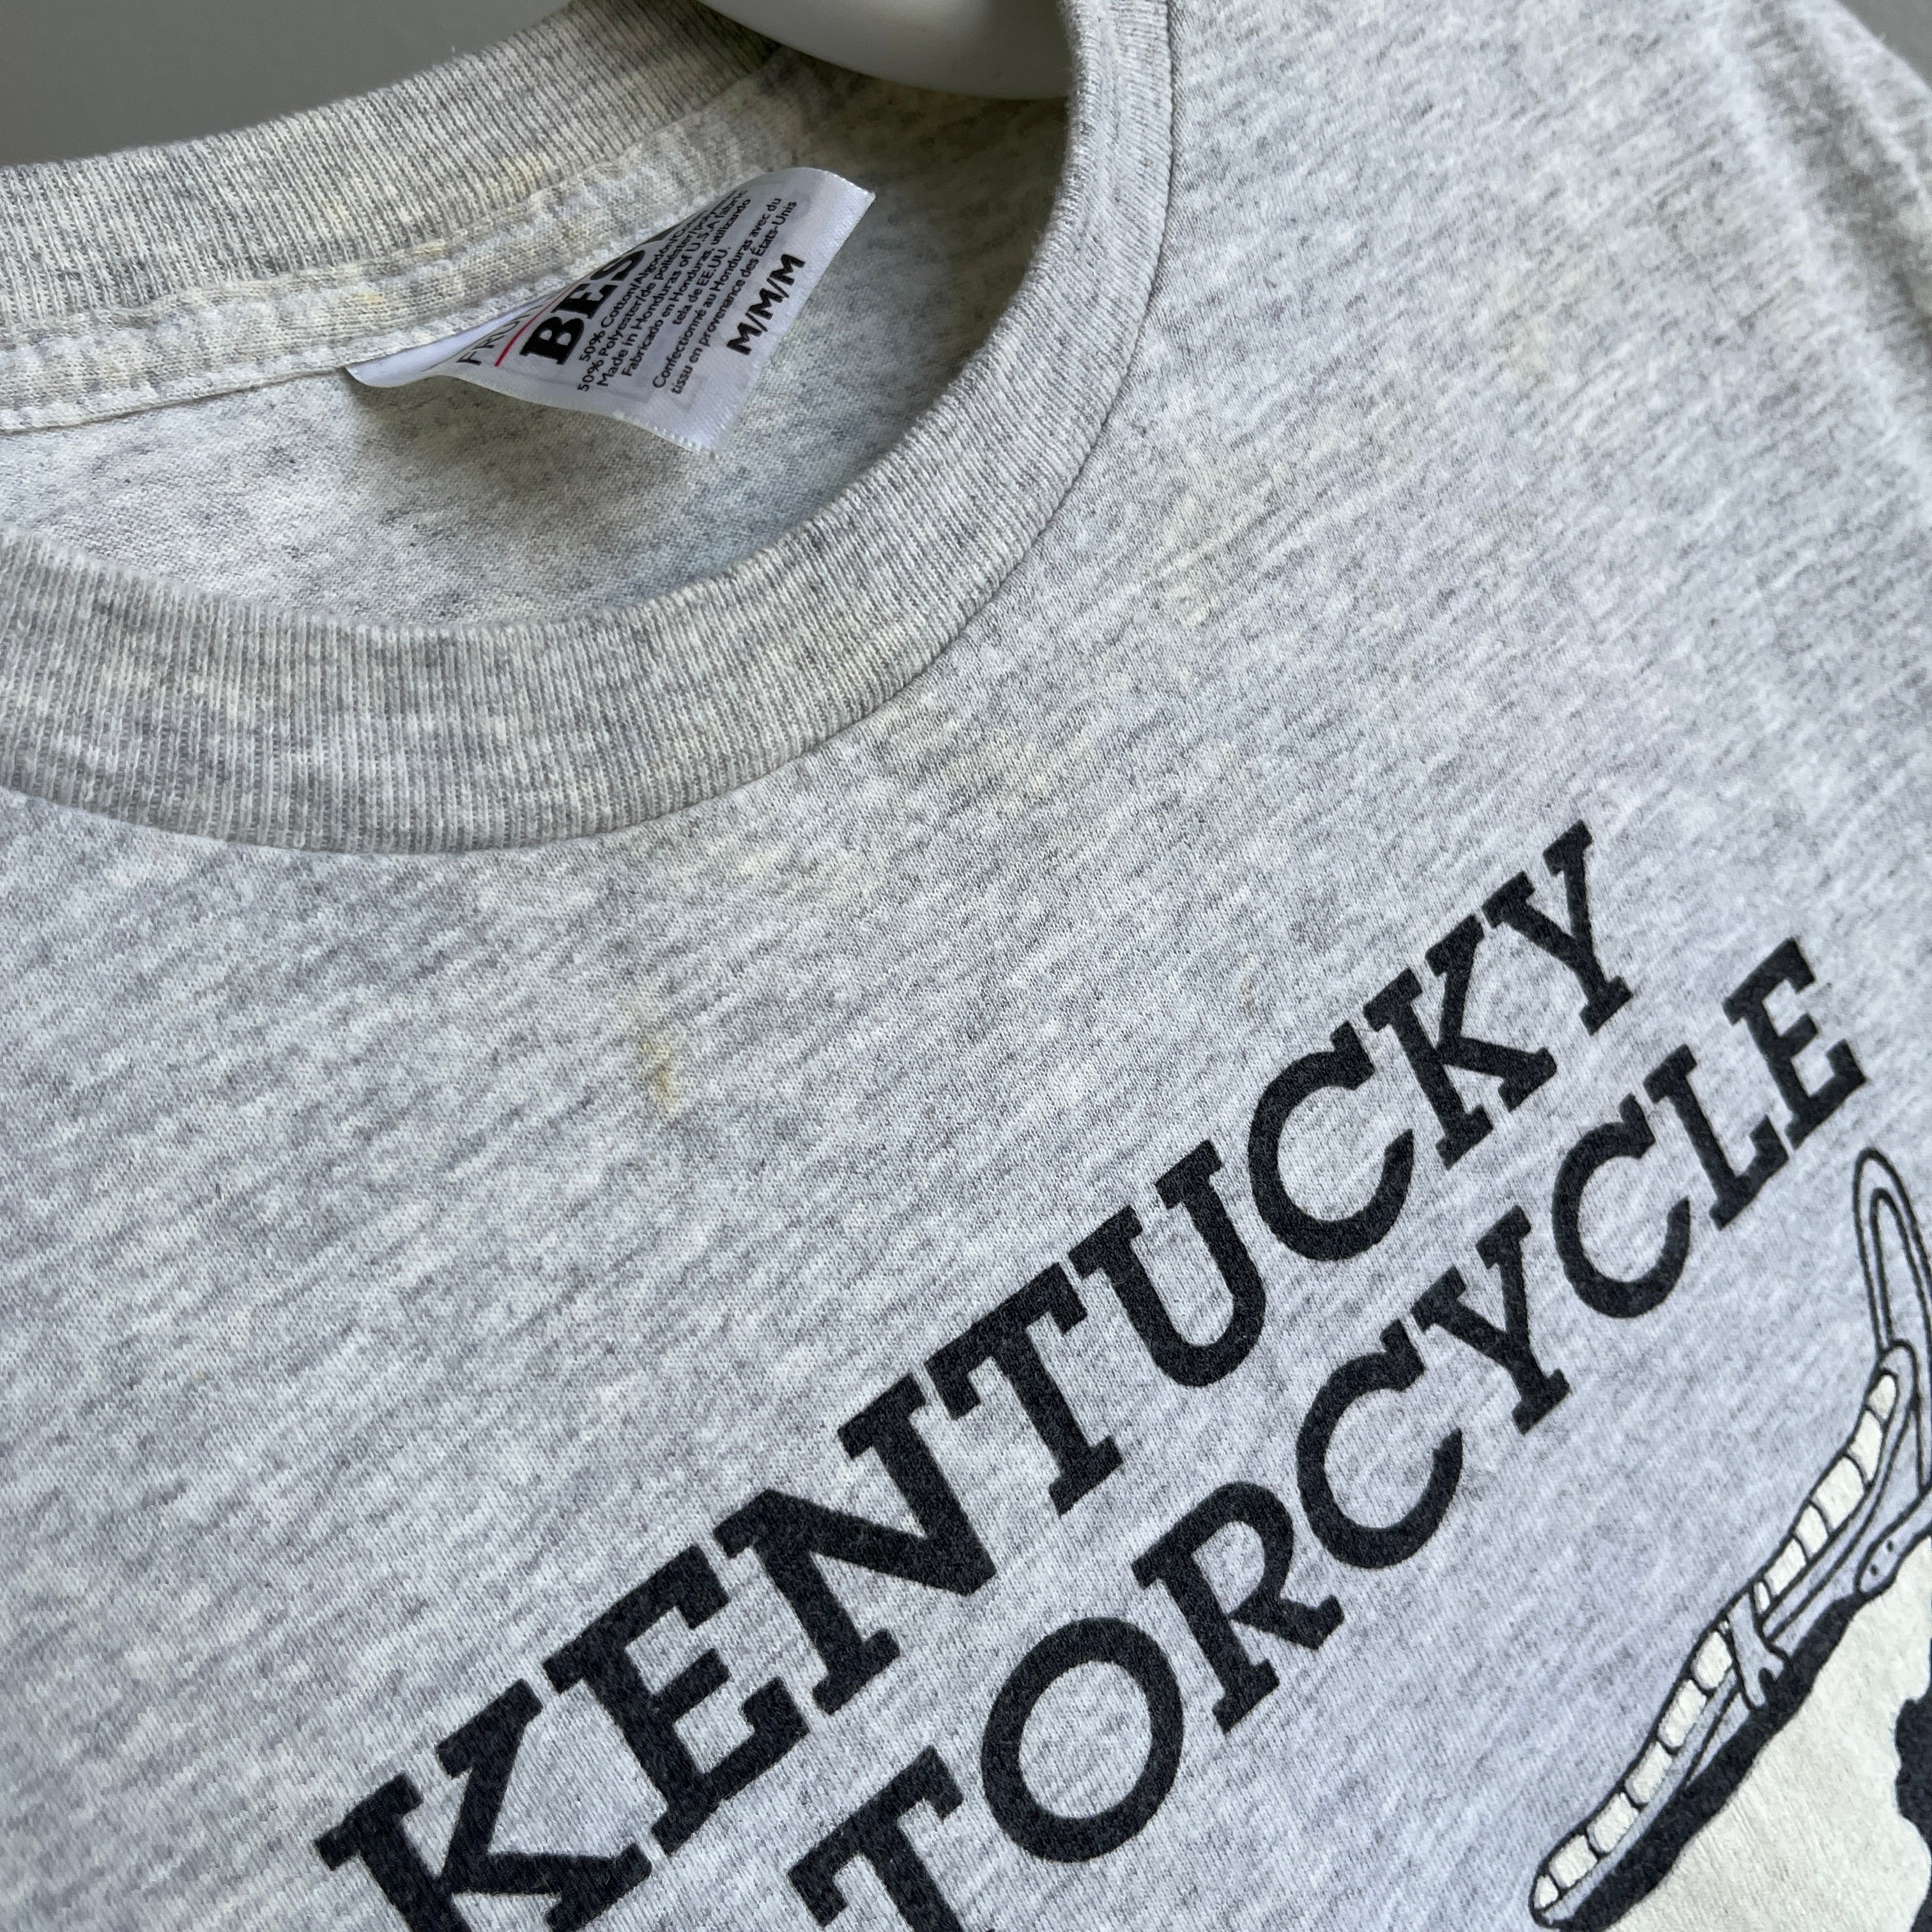 1990s Kentucky Motorcycle Cowasocky - V Important Sweatshirt